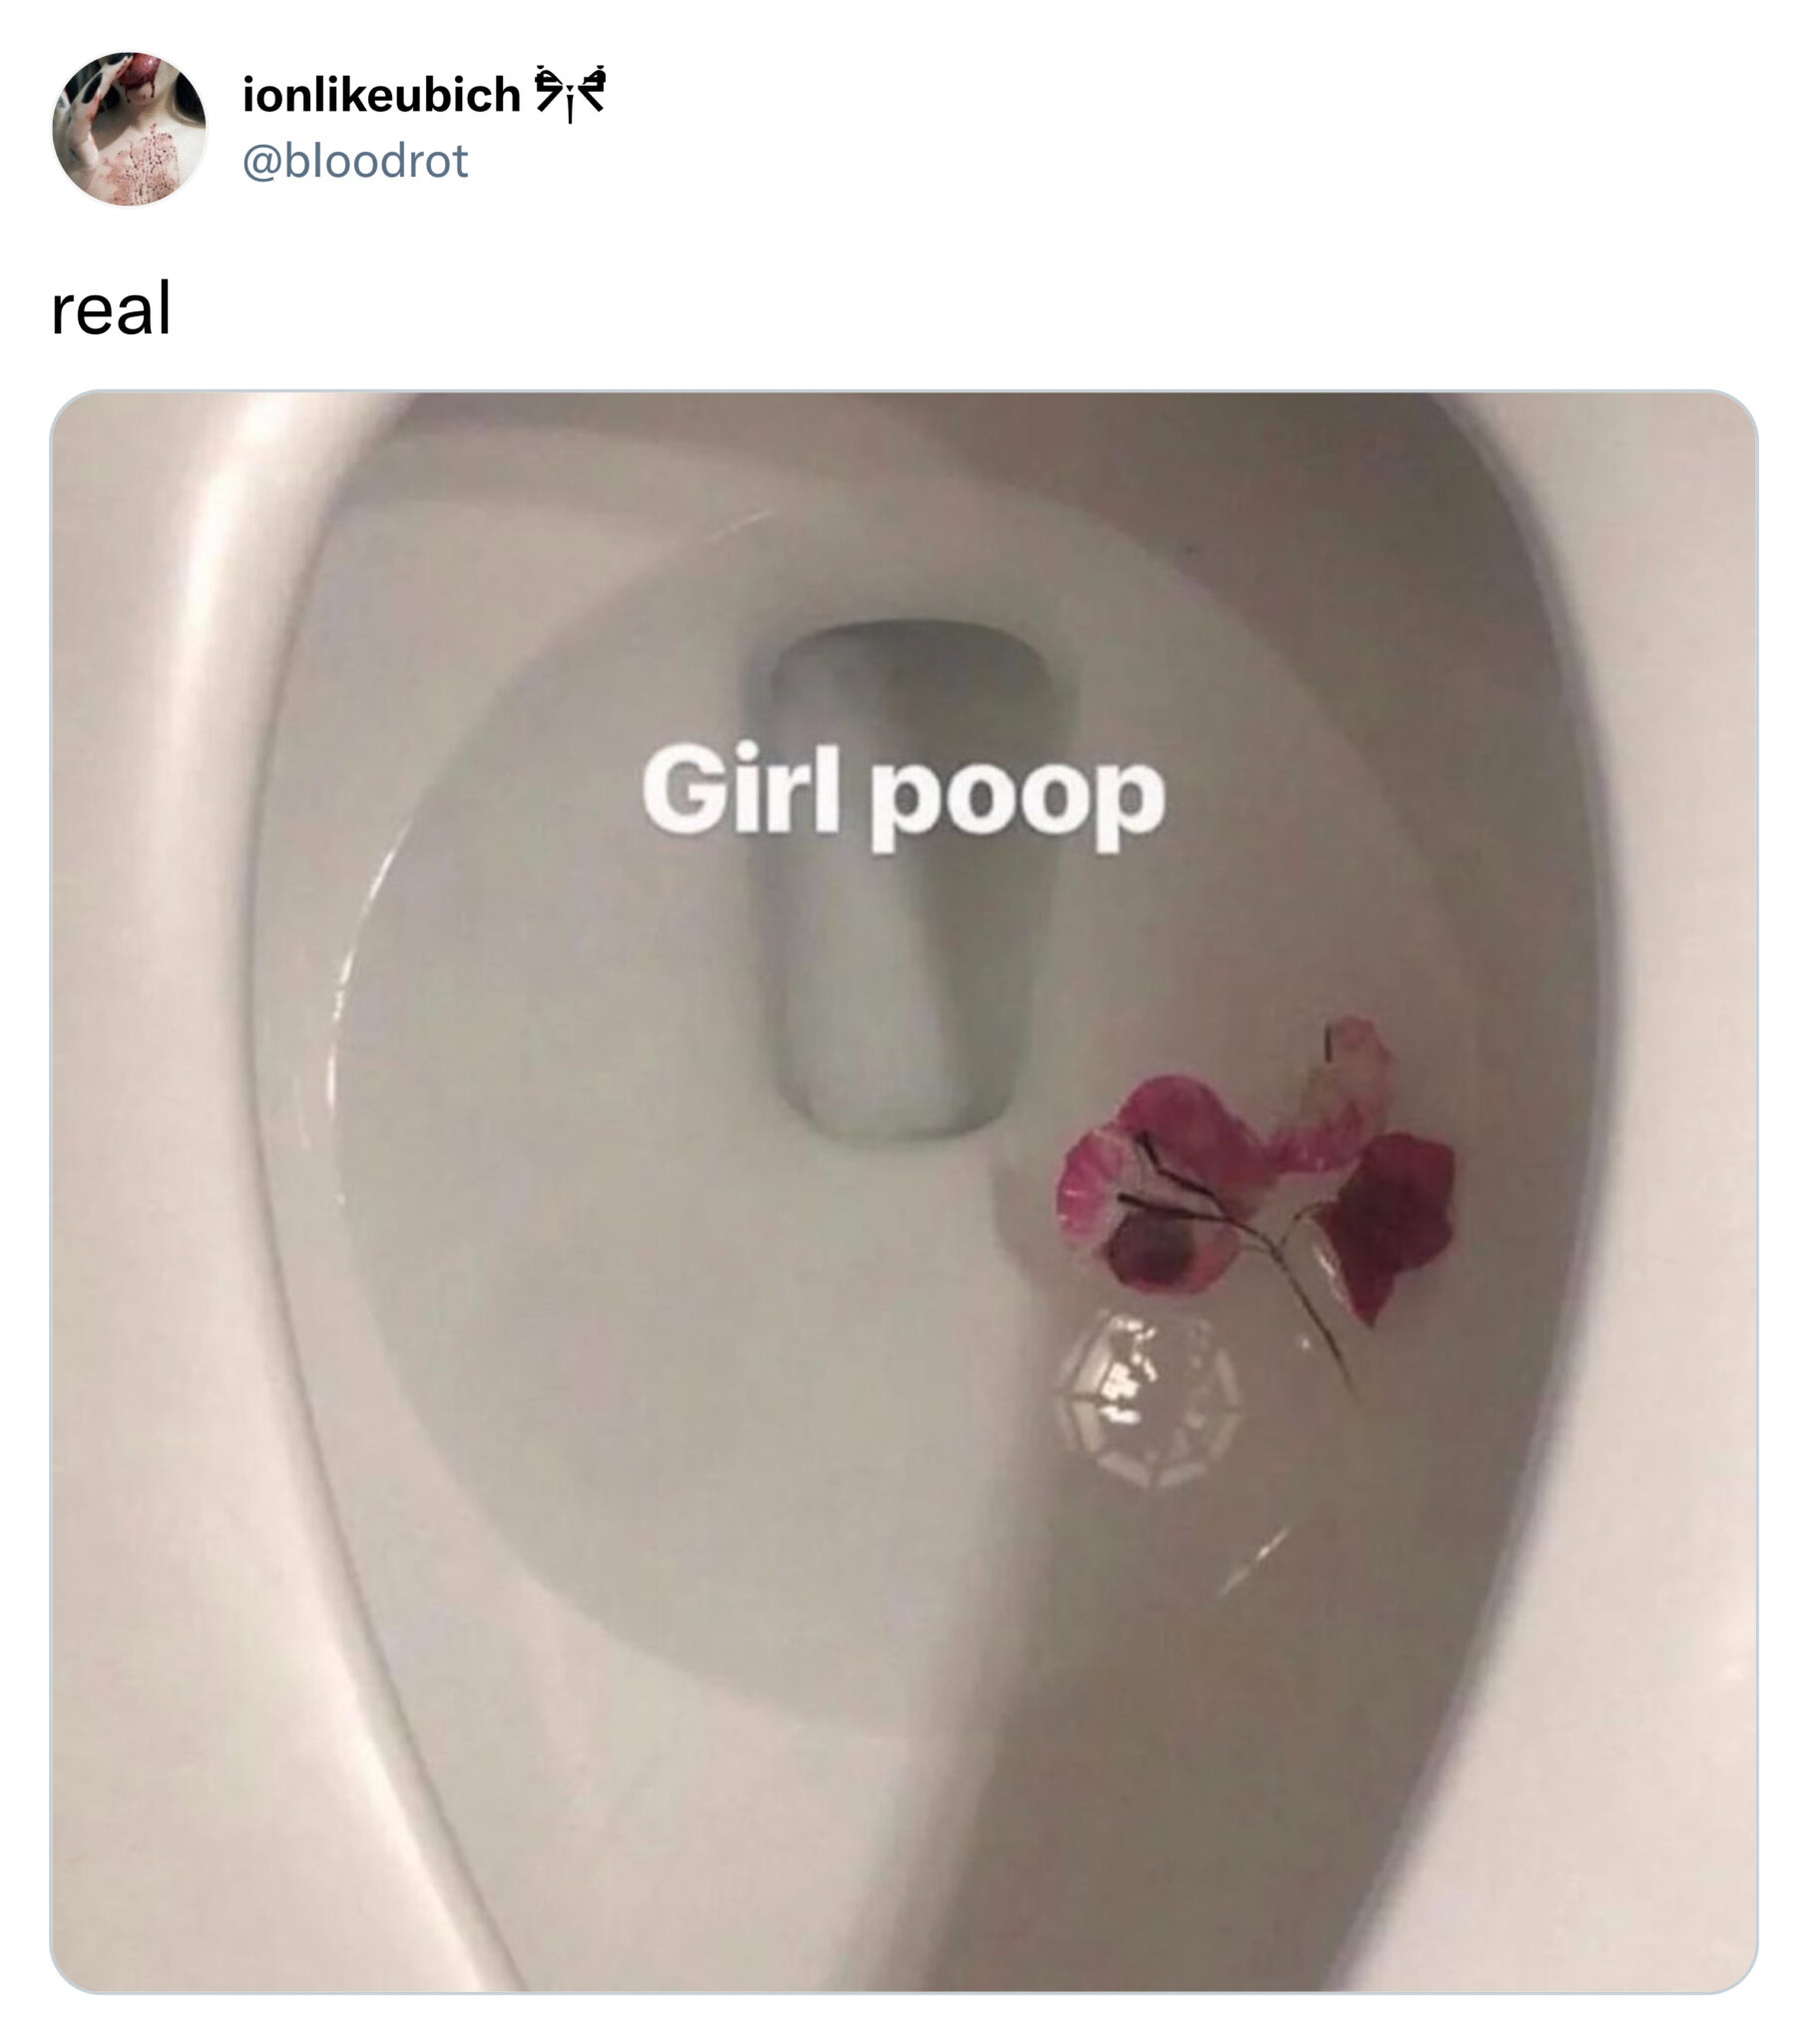 funny tweets - hardware - real ionubich Girl poop